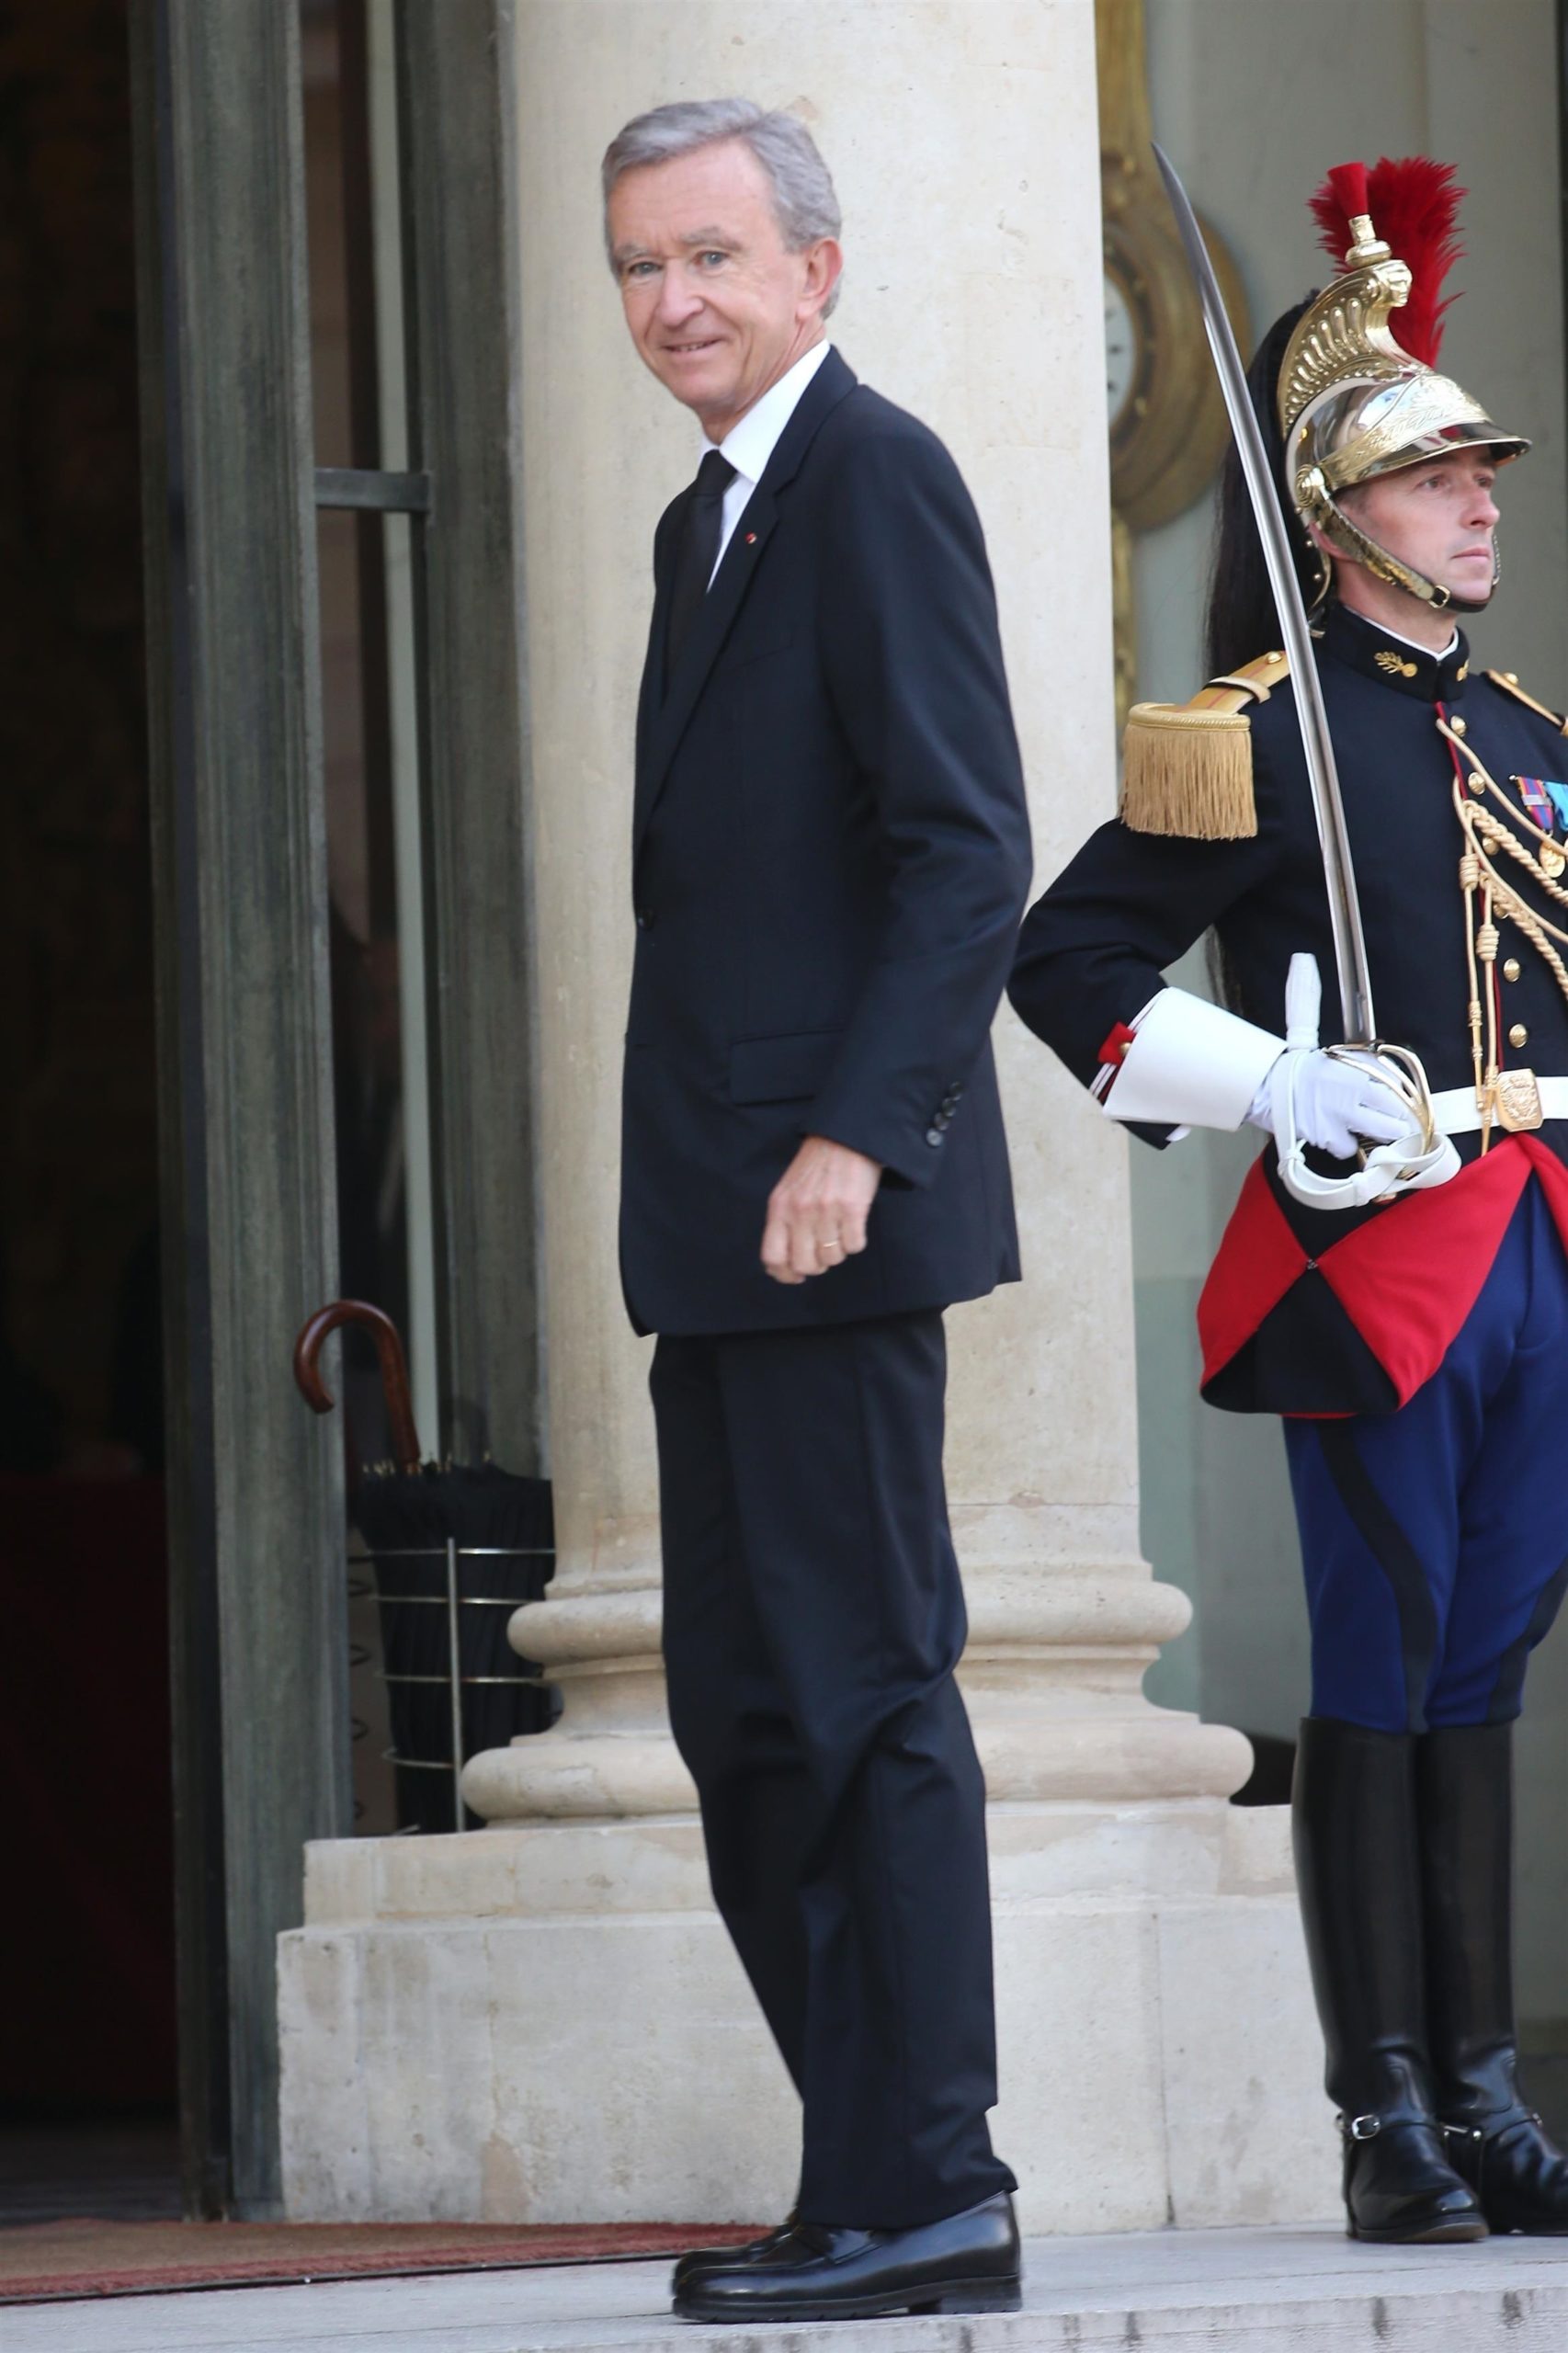 Bernard Arnault: The Richest Man in the World owns a villa in Les